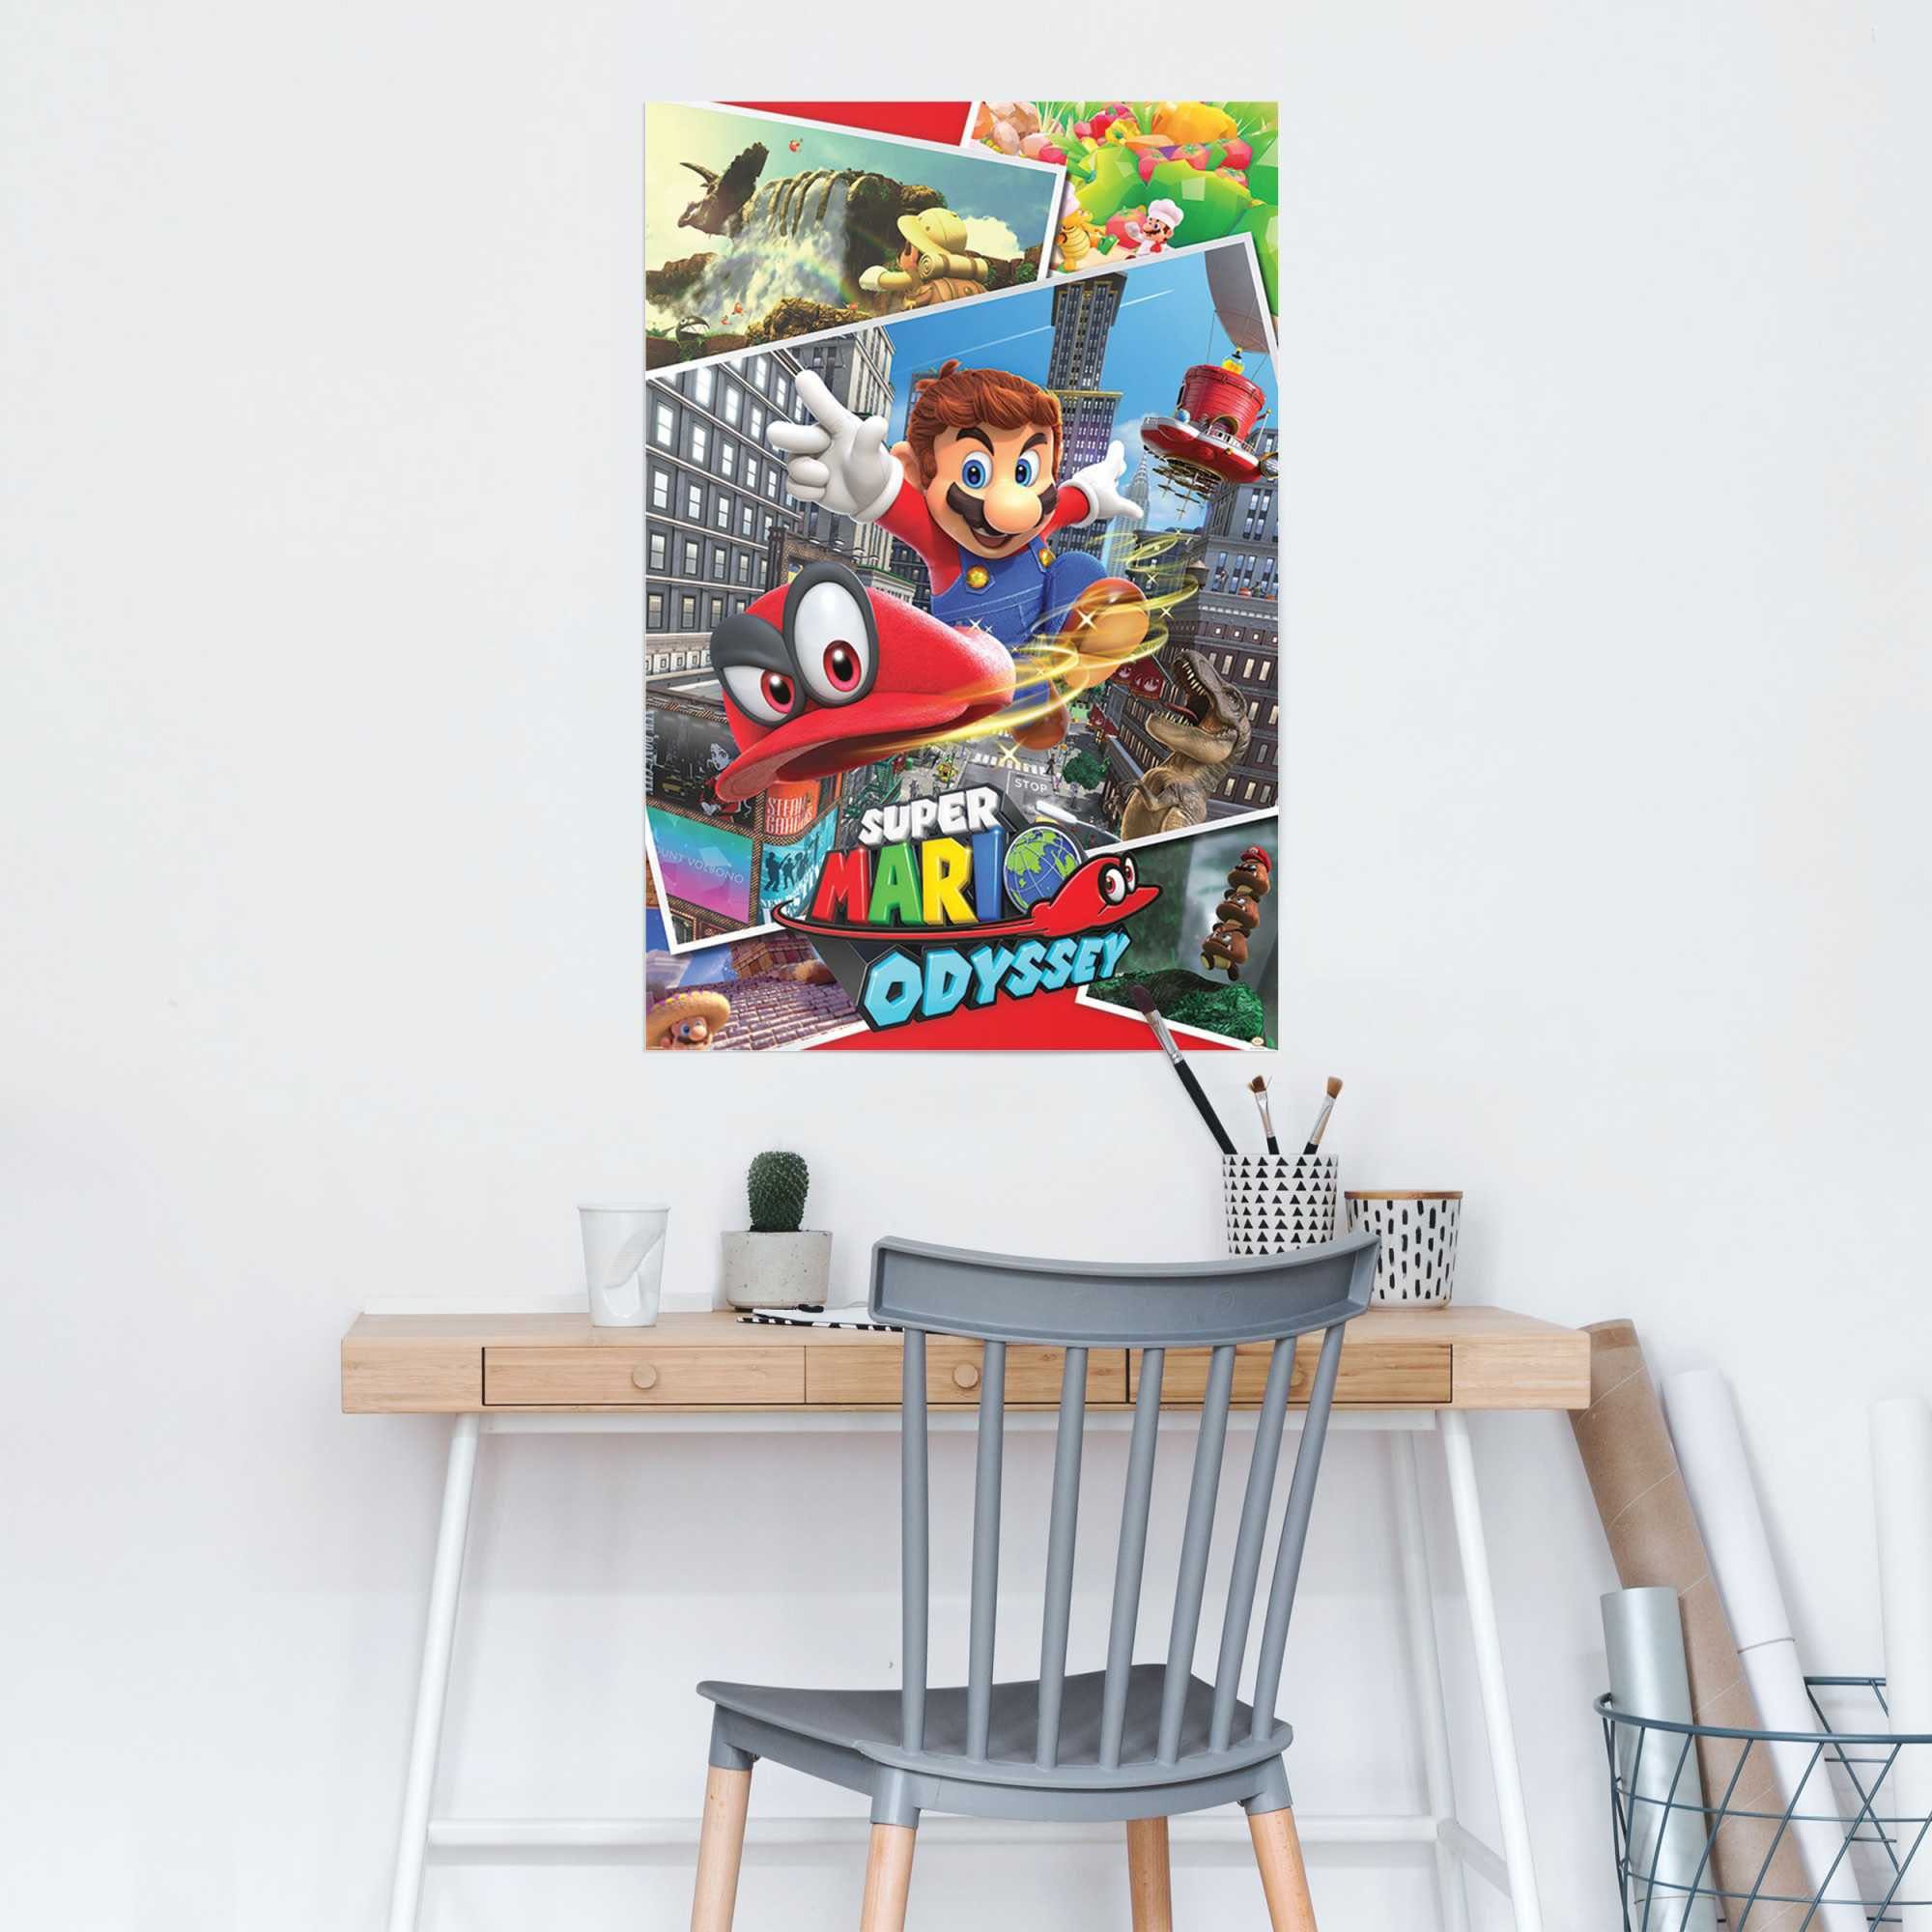 St) Odyssey, Super (1 Reinders! Poster Mario